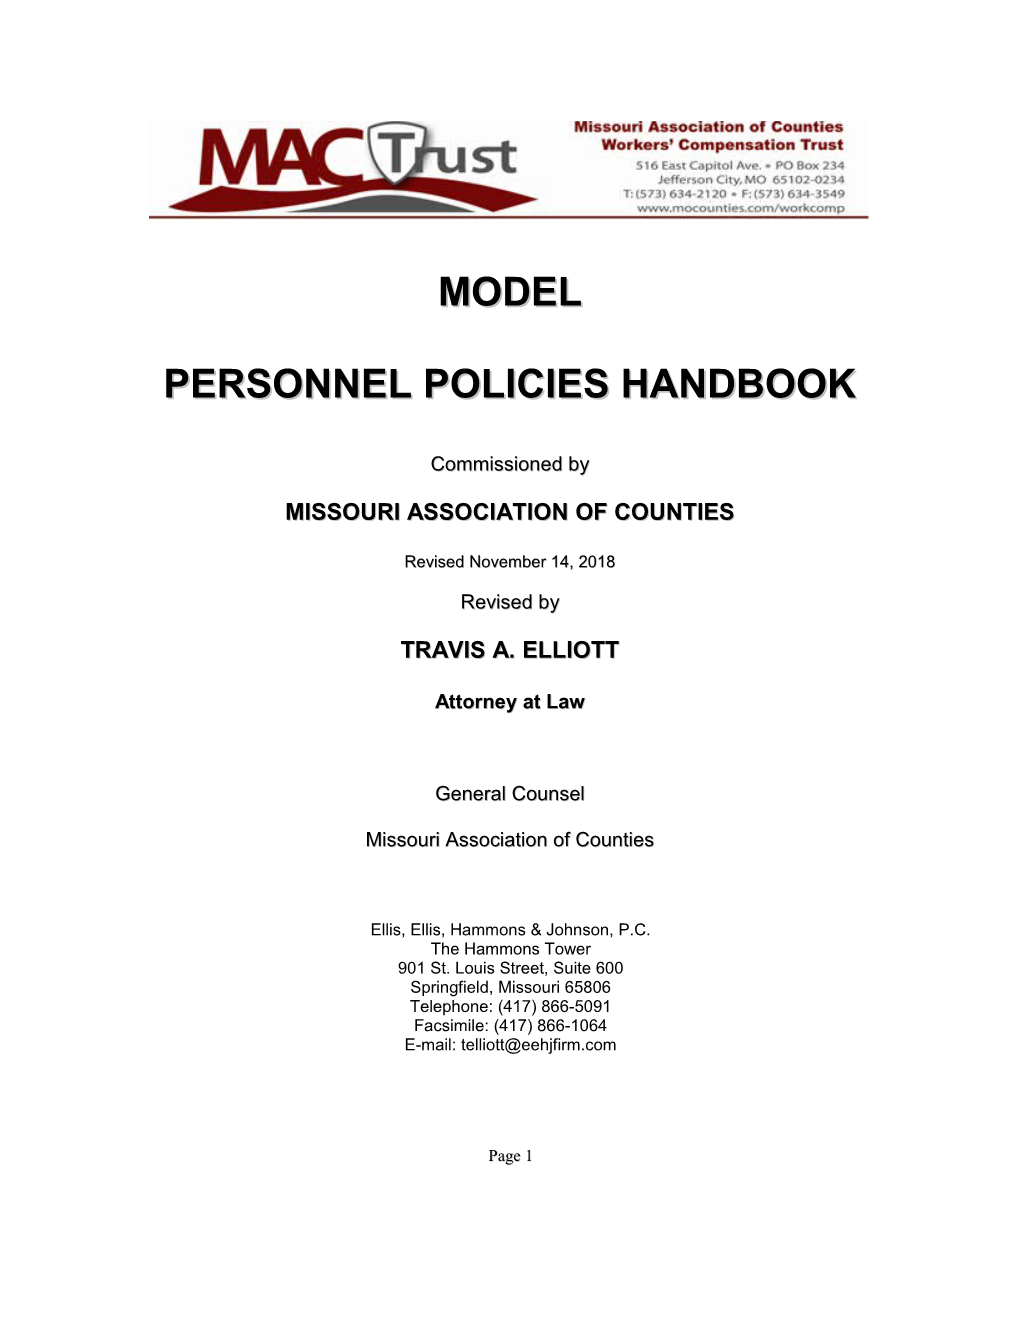 Personnel Policies Handbook